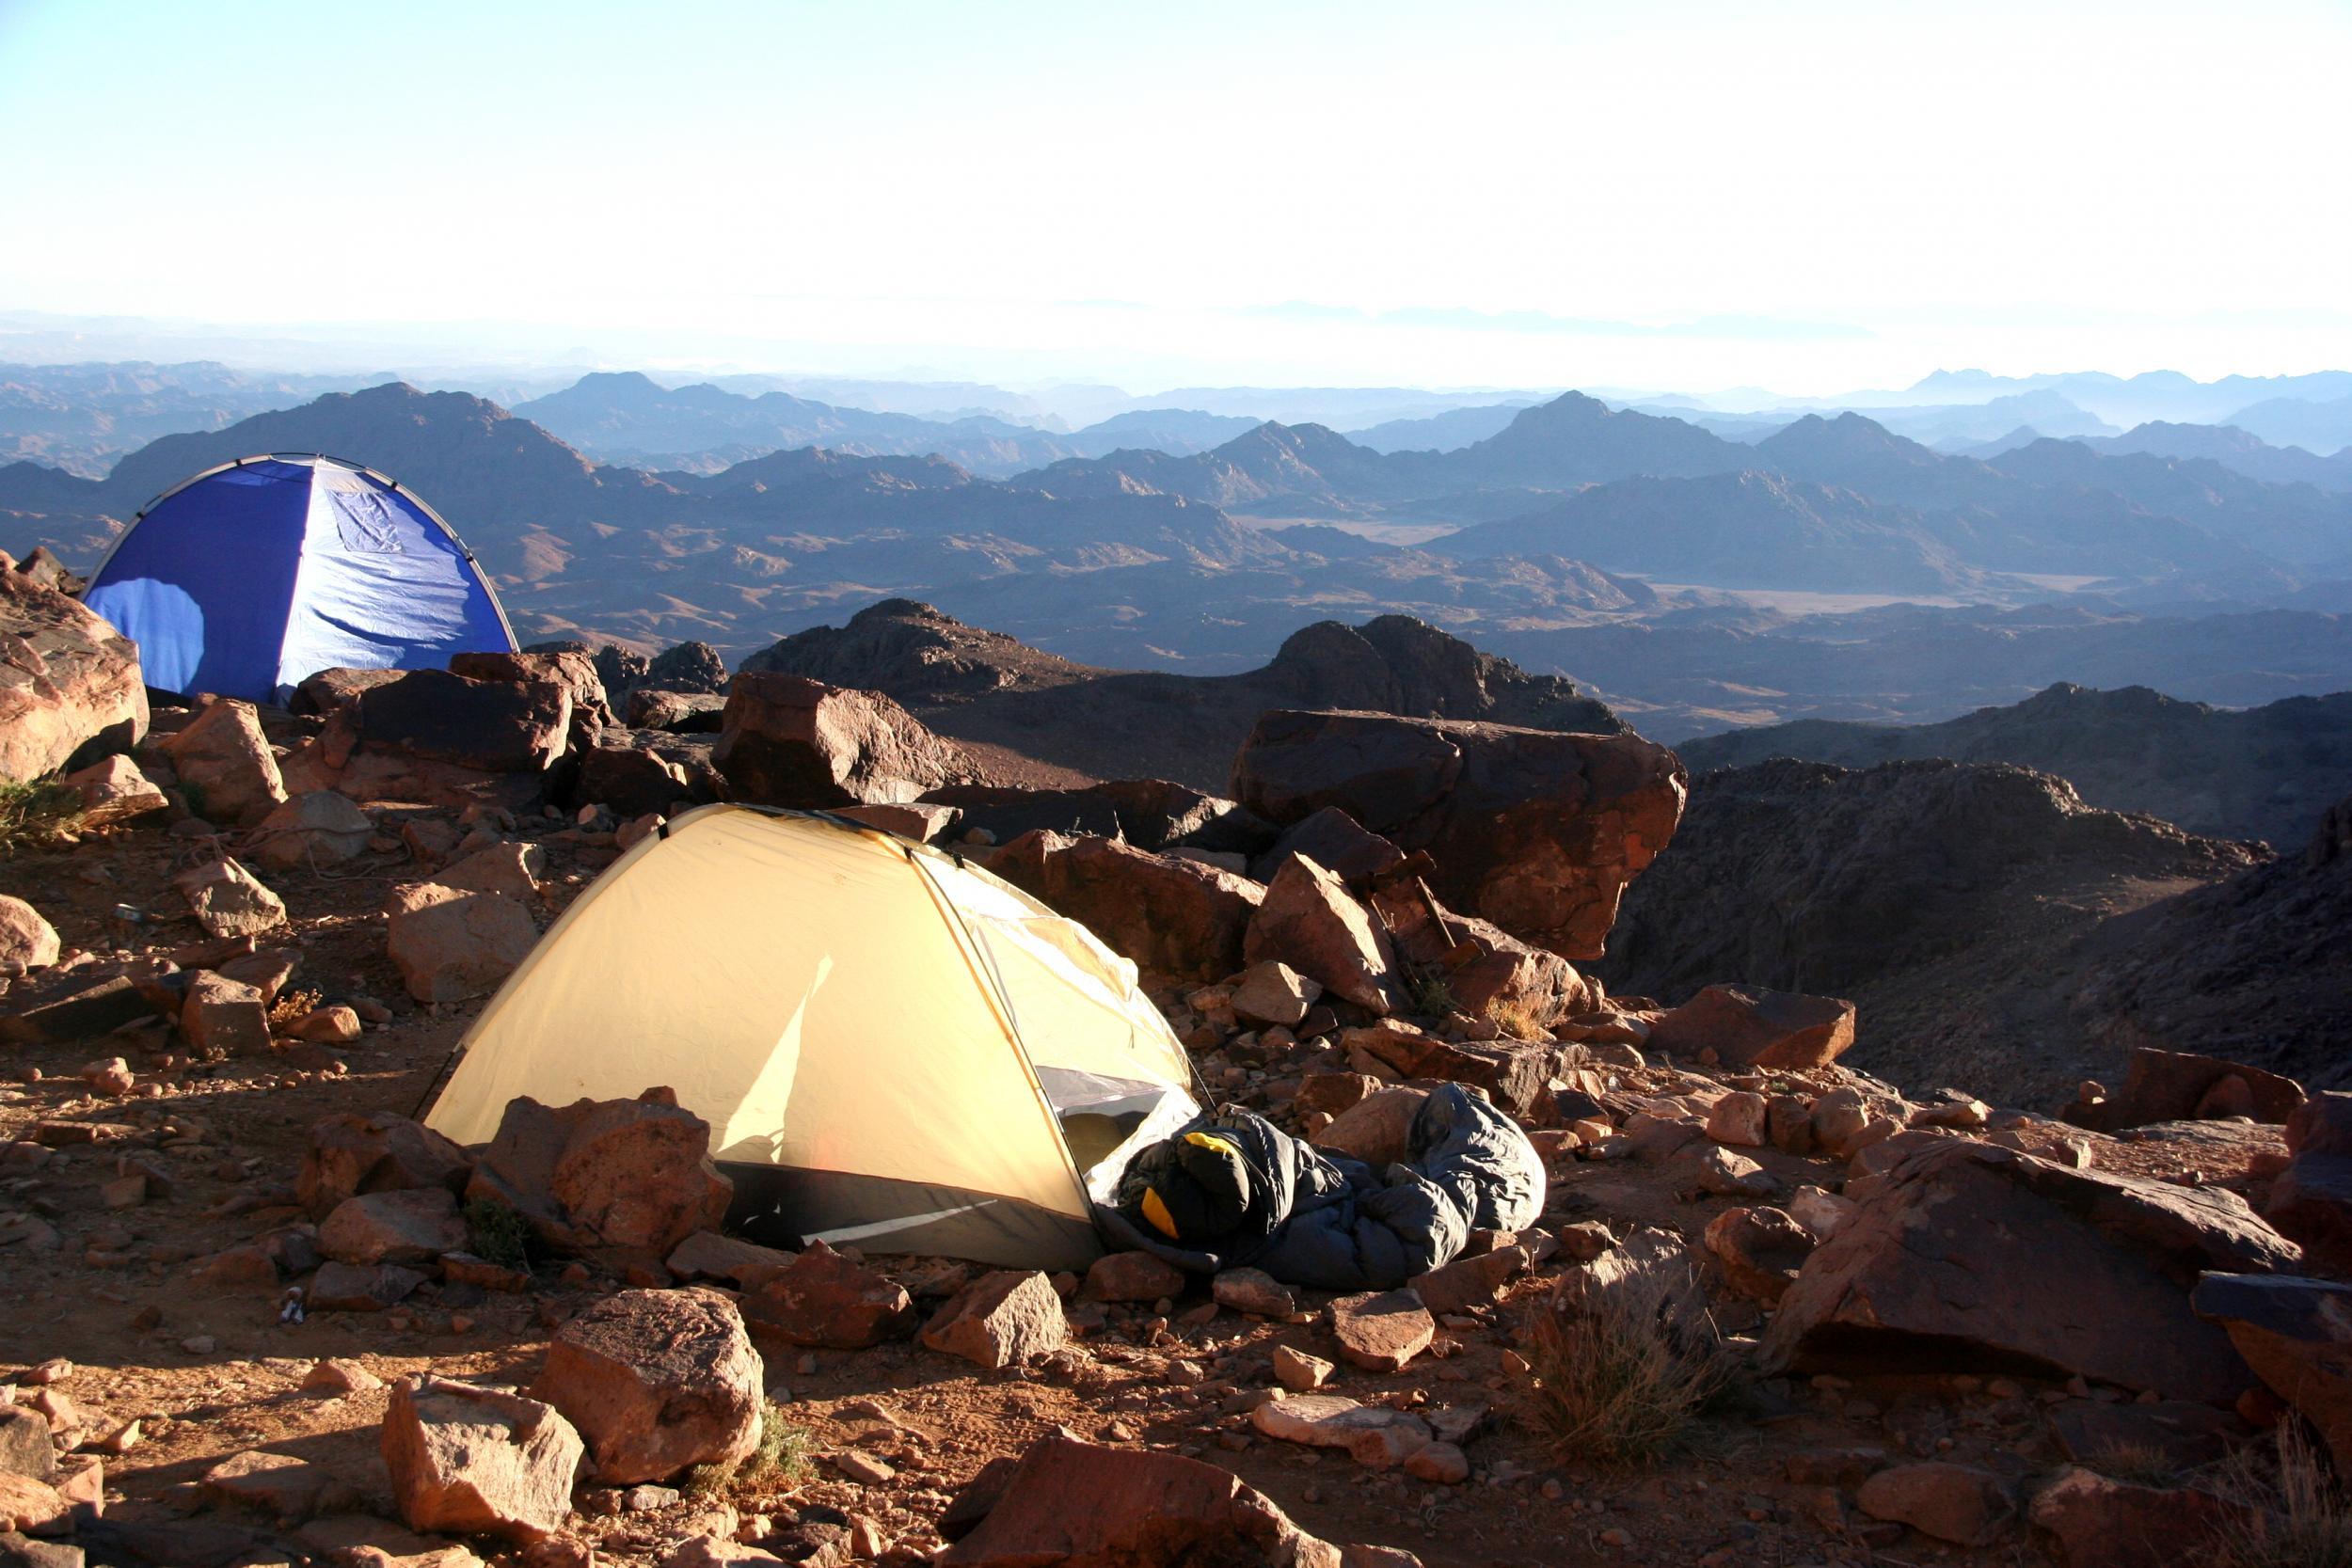 Final camp on the summit of Jebel Katarina